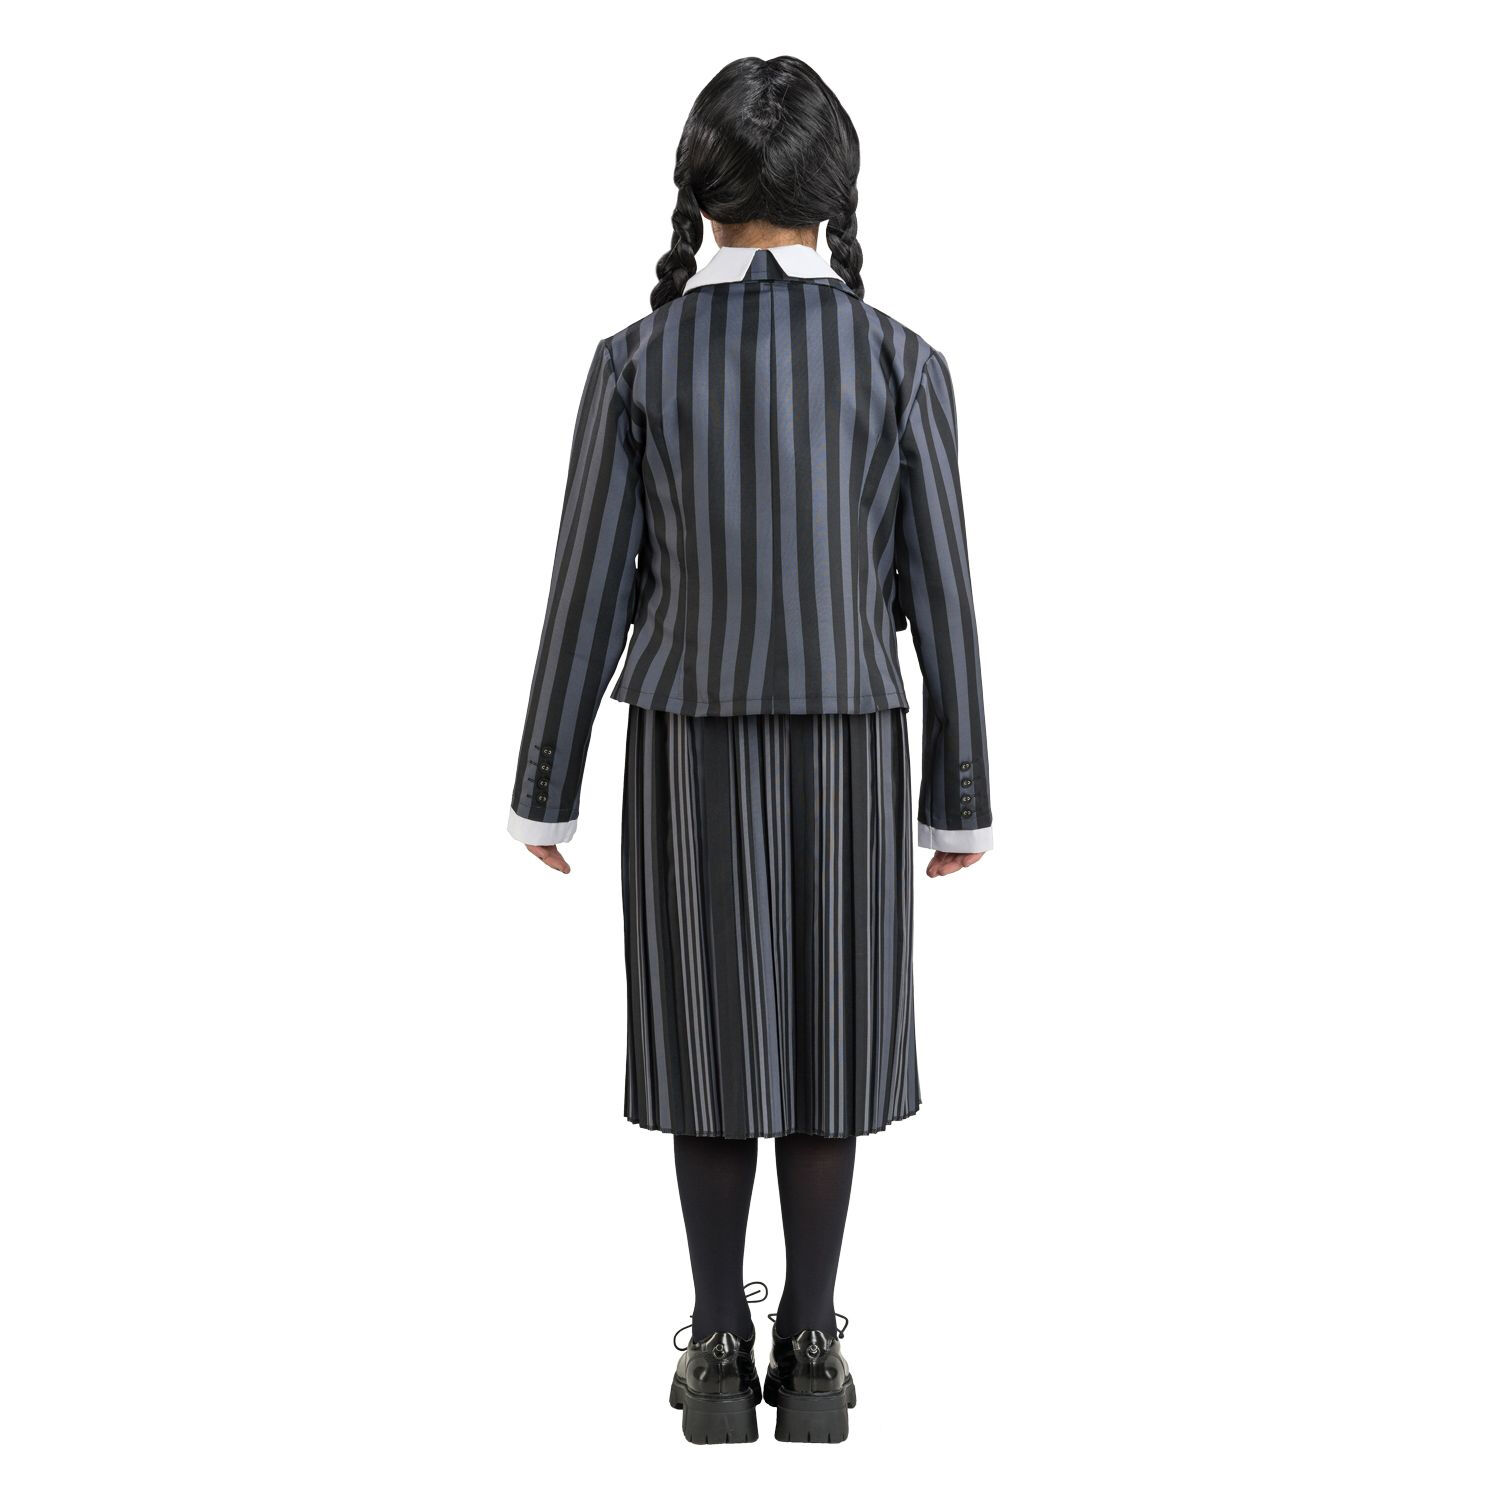 NEU Kinder-Kostm Wednesday Addams Schul-Uniform, schwarz-grau gestreift, 3-tlg., Gr. 140 Bild 2